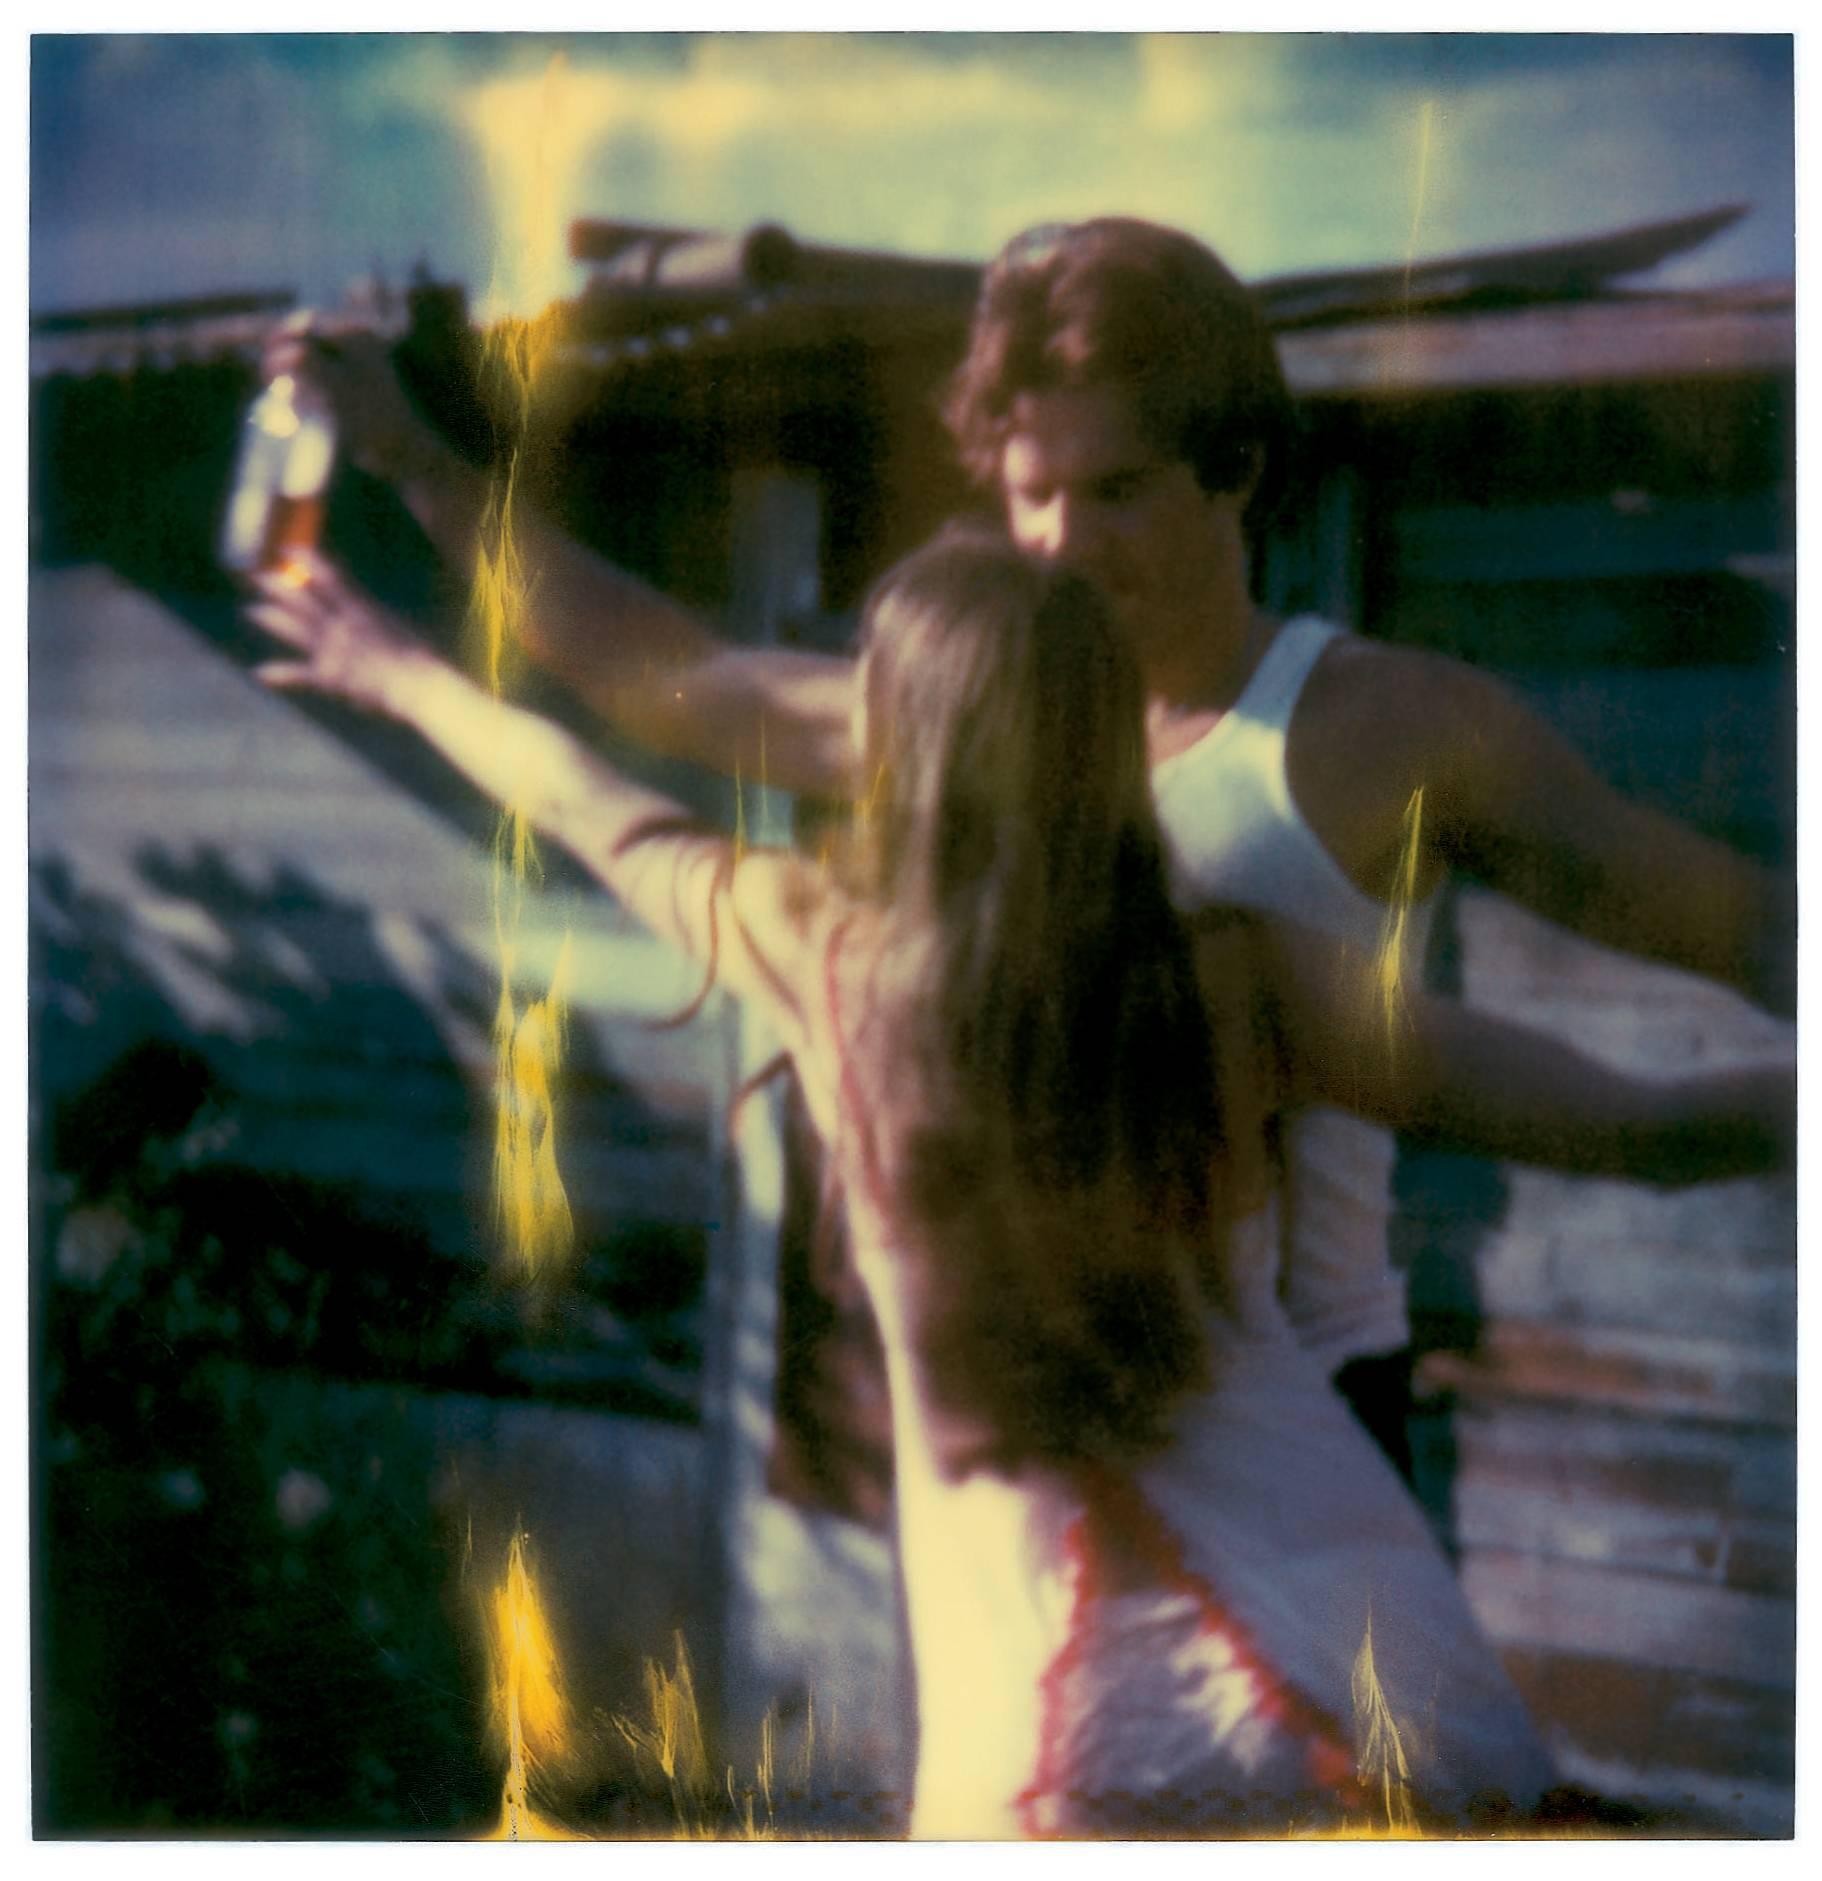 Whisky Dance I (Sidewinder) 8 pieces, analog, 82x80cm each - Black Color Photograph by Stefanie Schneider